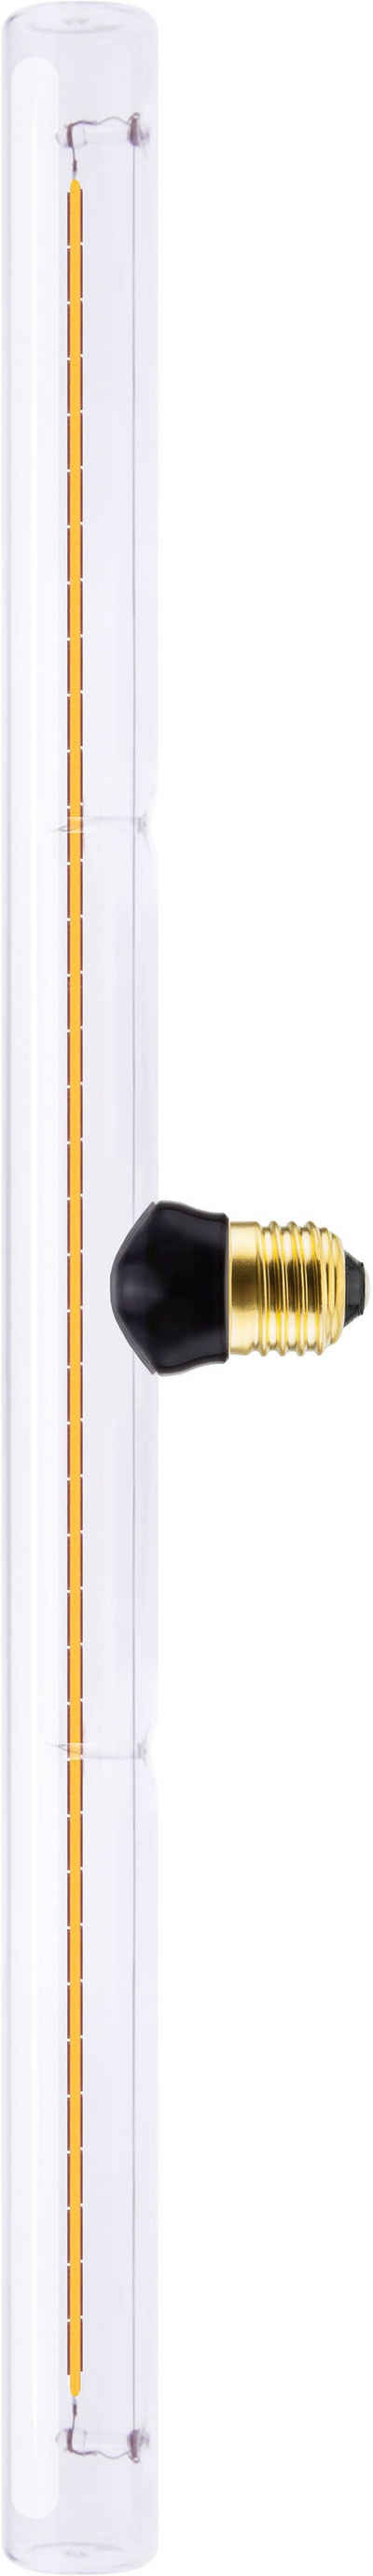 SEGULA LED-Leuchtmittel LED Tube rotable 500mm, E27, Warmweiß, dimmbar, E27, Linienlampe, Tube rotable 90°